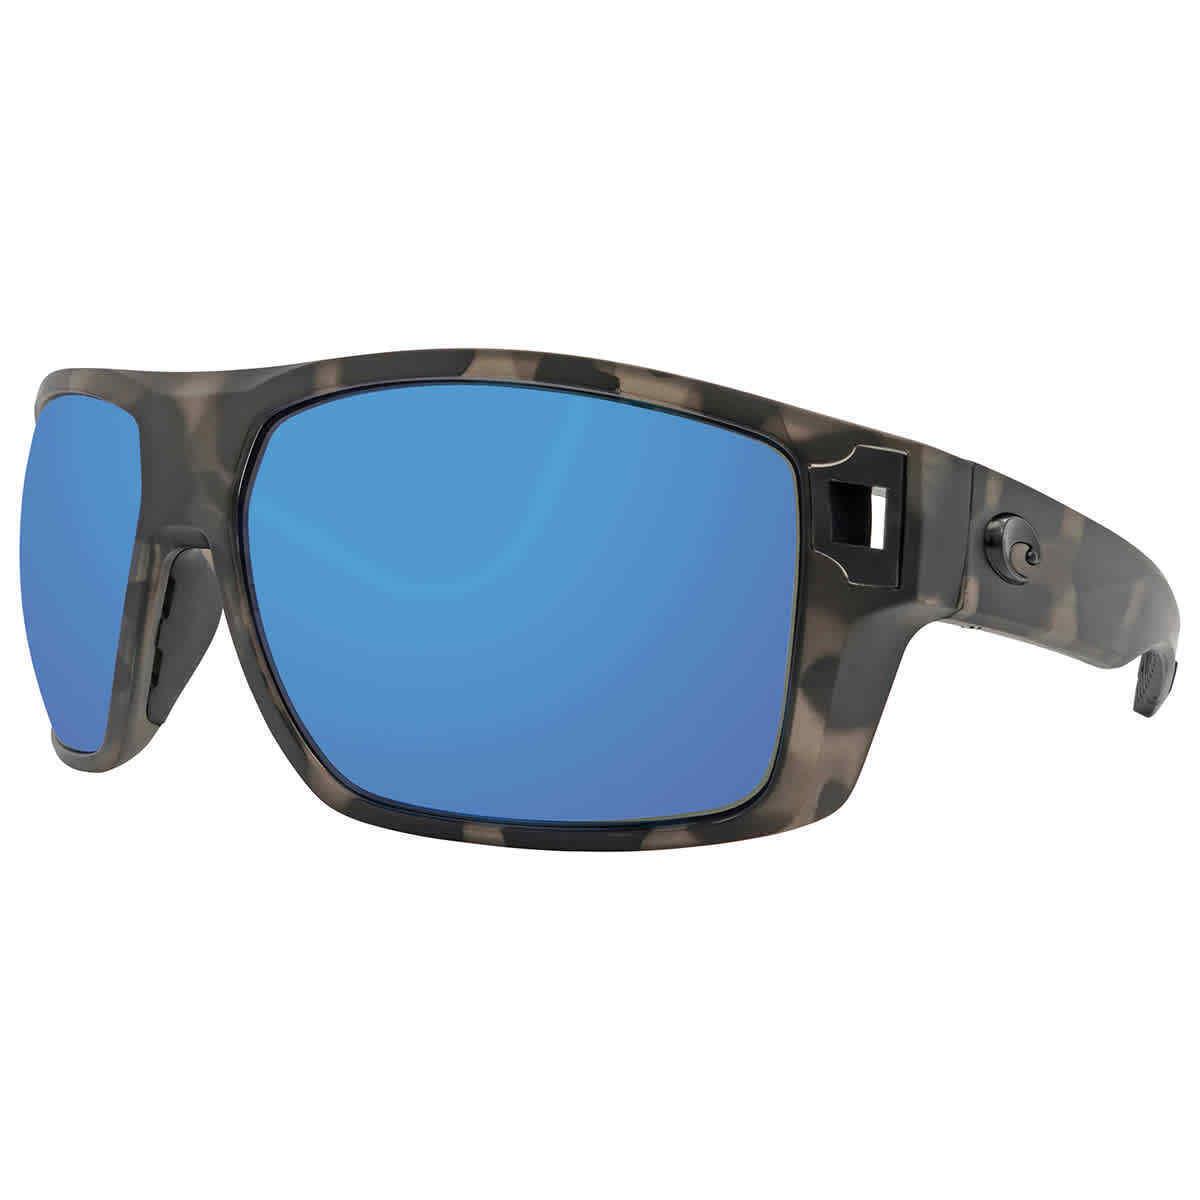 Costa Del Mar Diego Blue Mirror Polarized Glass Men`s Sunglasses 6S9034 903431 - Frame: Gray, Lens: Blue